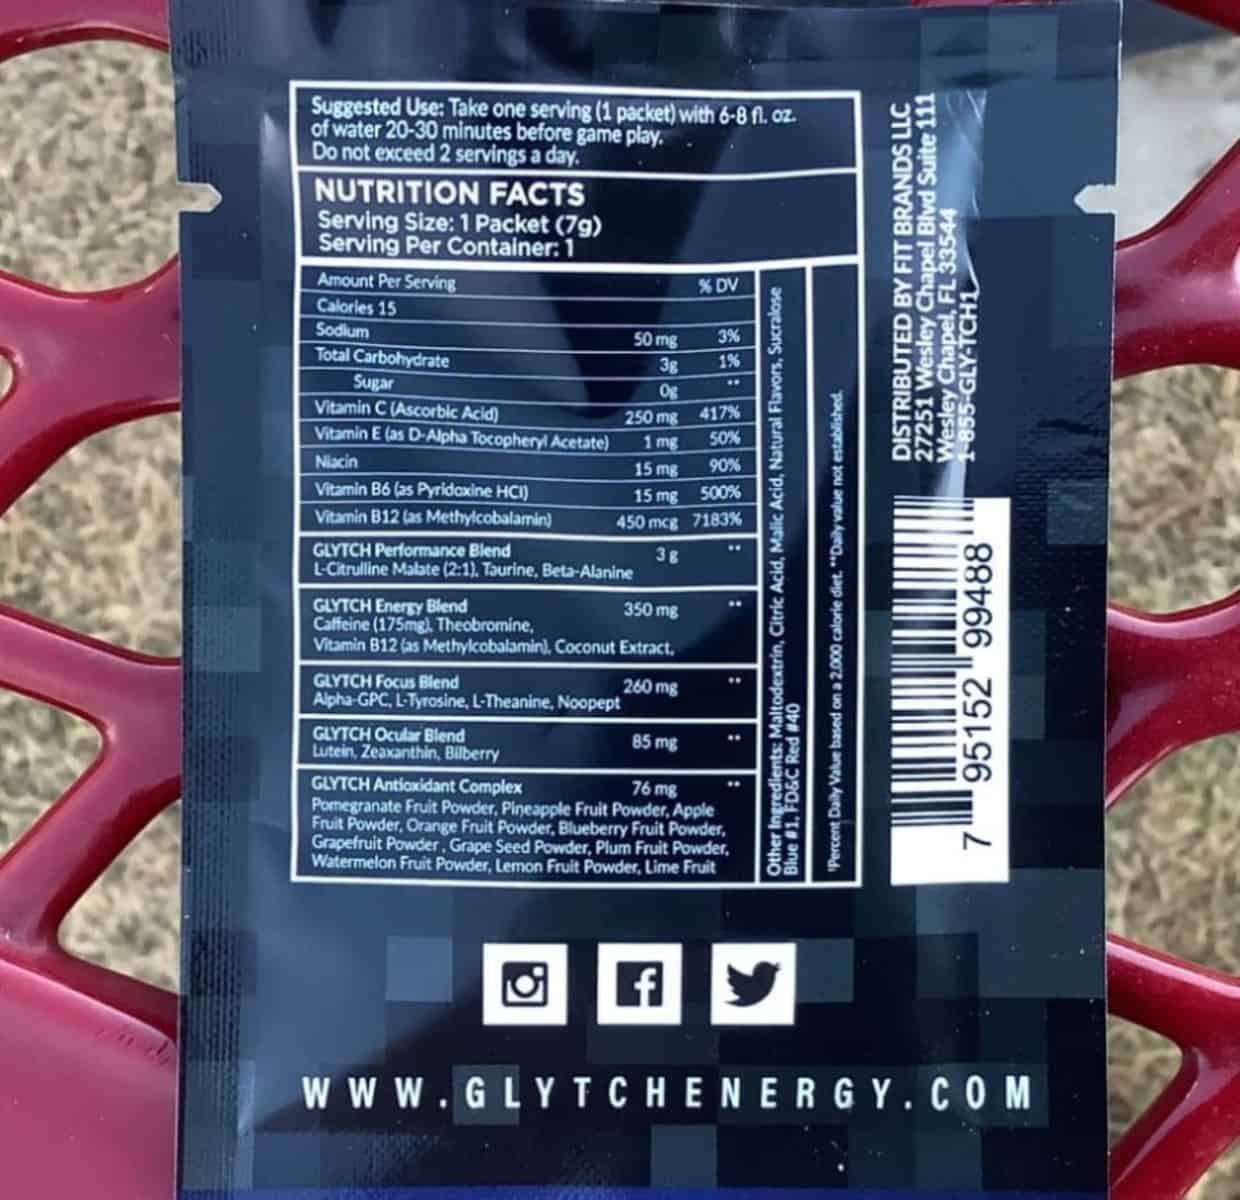 Label of Glytch Energy